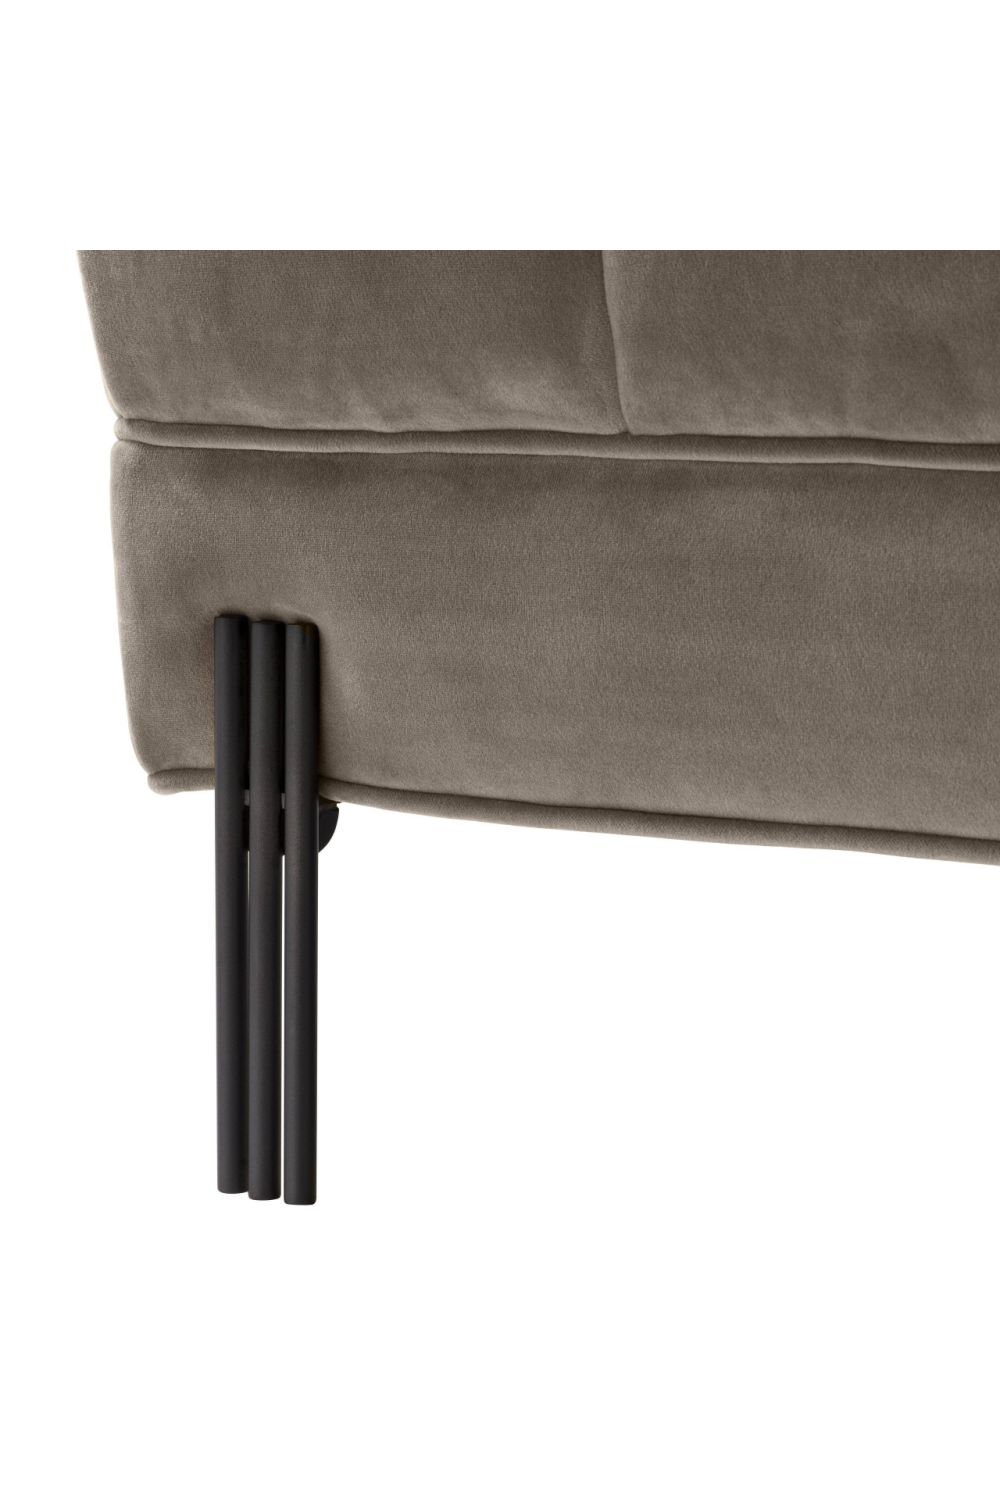 Greige Tufted Upholstered Bench | Eichholtz Sienna | OROA